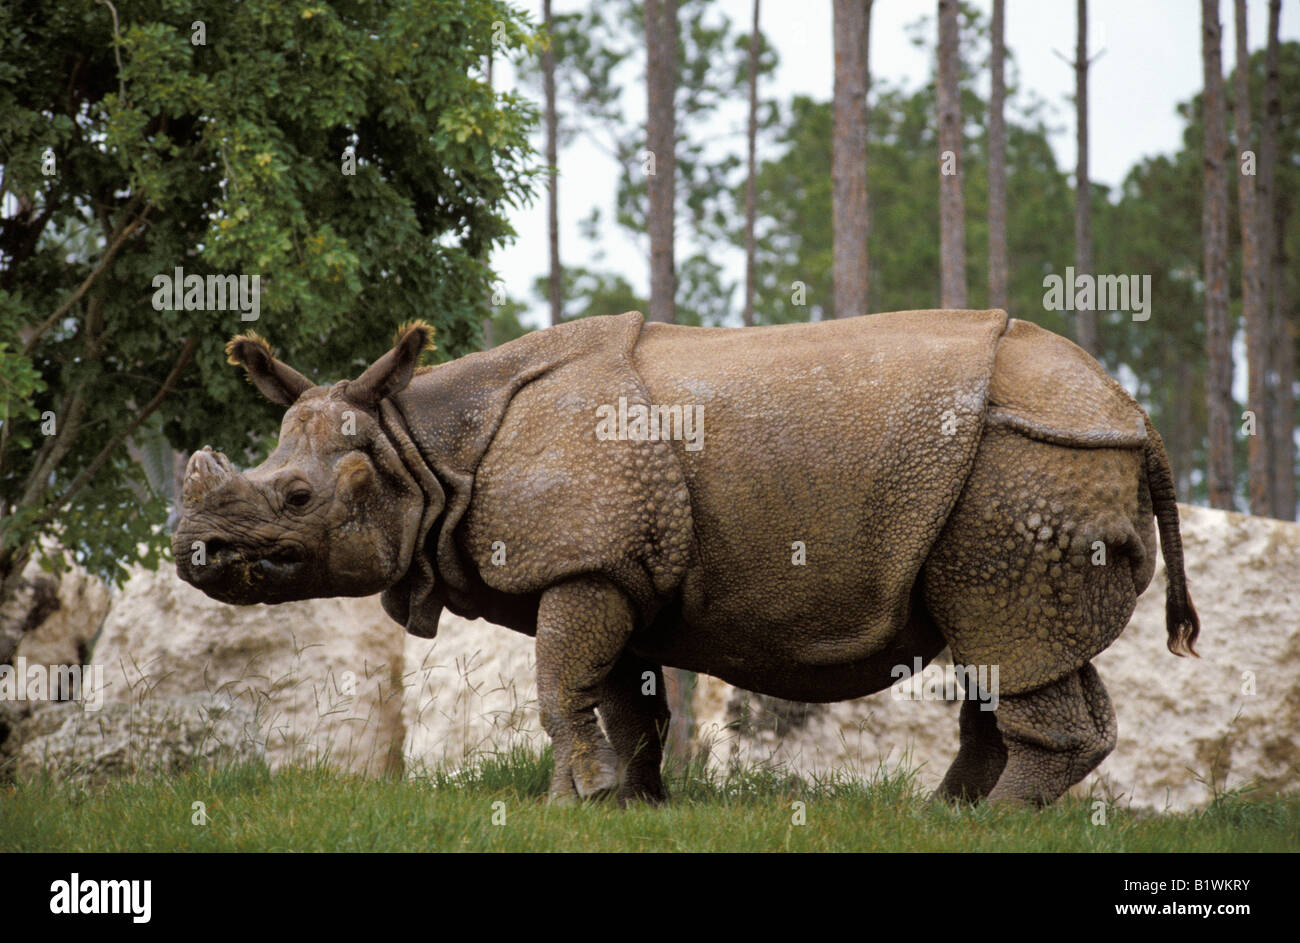 Panzernashorn rhinocéros indien rhinocéros unicorne de l'Inde une plus grande Rhinocéros Indien Rhinoceros unicornis miami Zoo Animals Asia Afrika e Banque D'Images